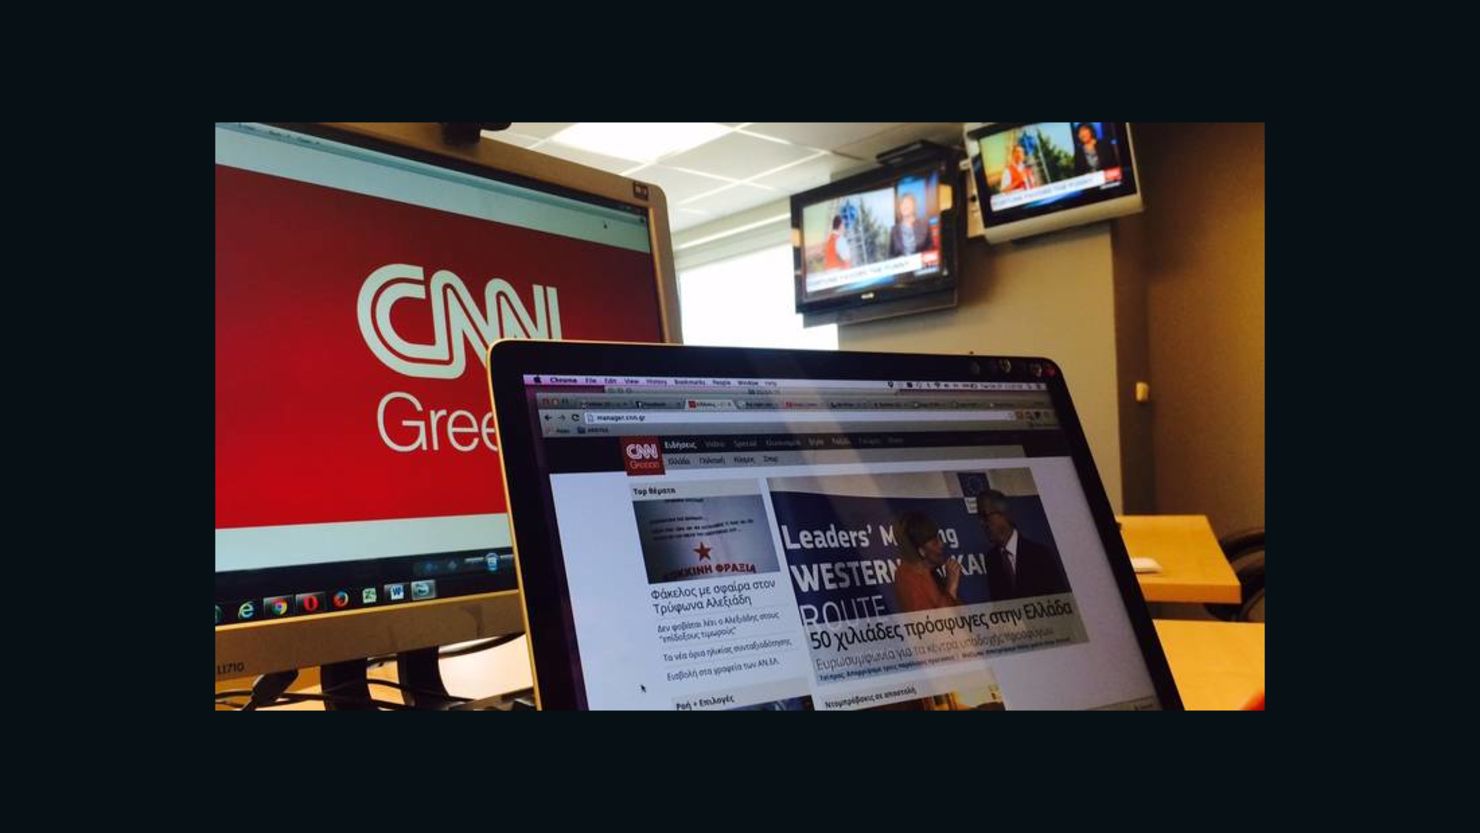 The new service provides digital news in Greek at CNN.gr.